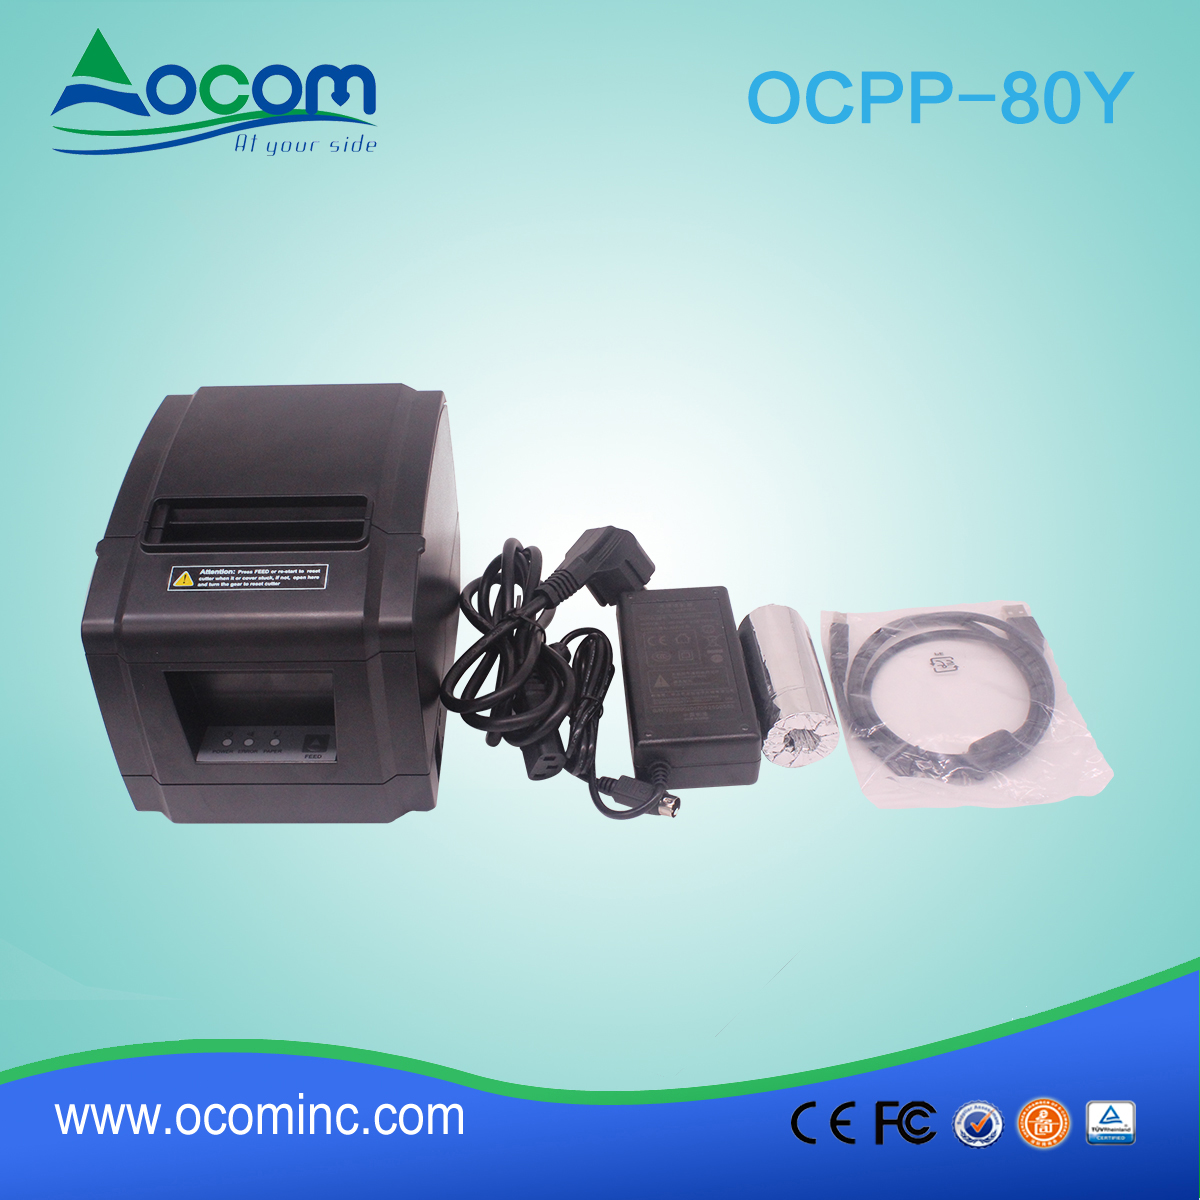 OCPP-80Y-low cost 80mm thermal receipt printer hot selling